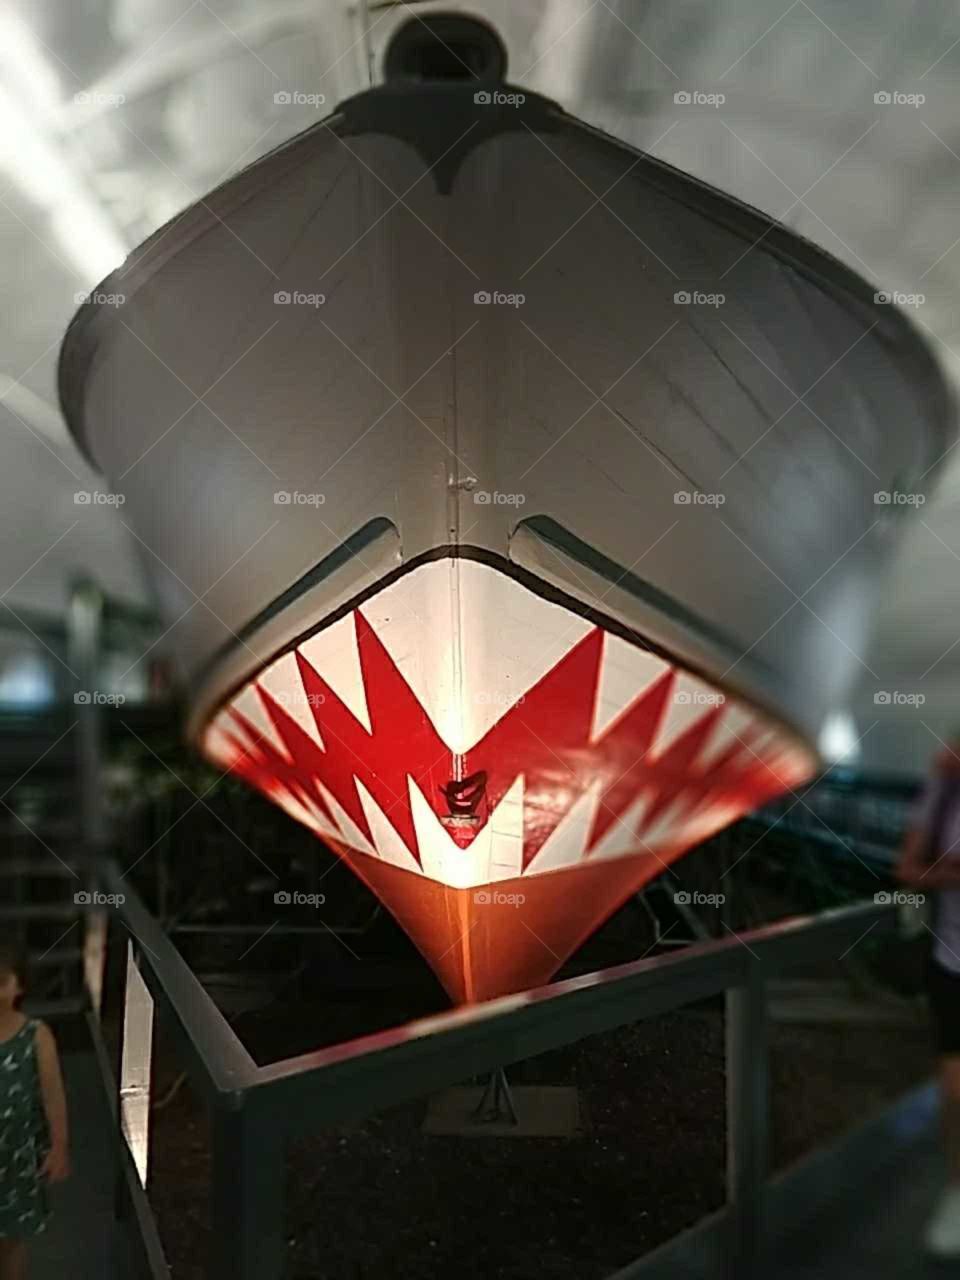 shark boat